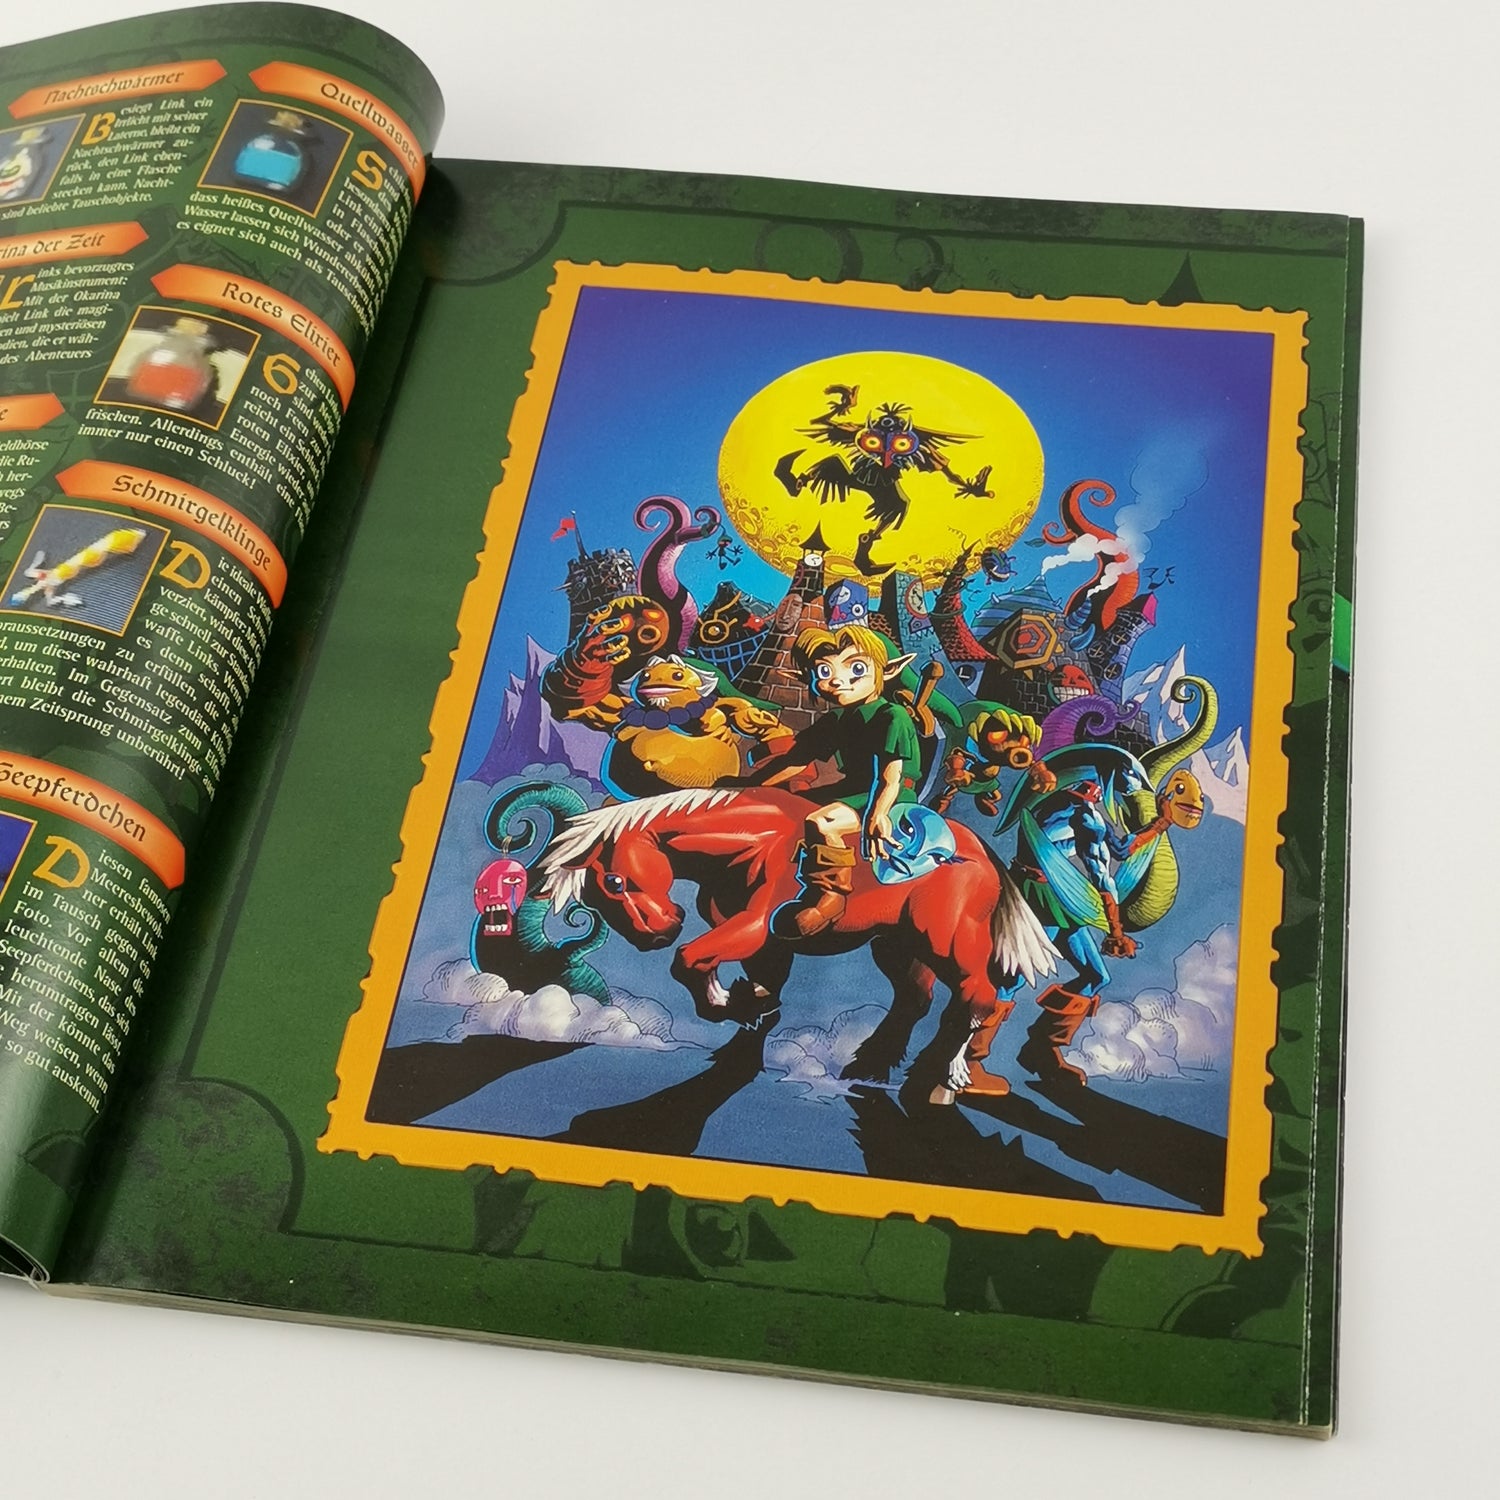 Nintendo 64 Spiel : Zelda Majoras Mask + Spieleberater - OVP Anleitung PAL N64